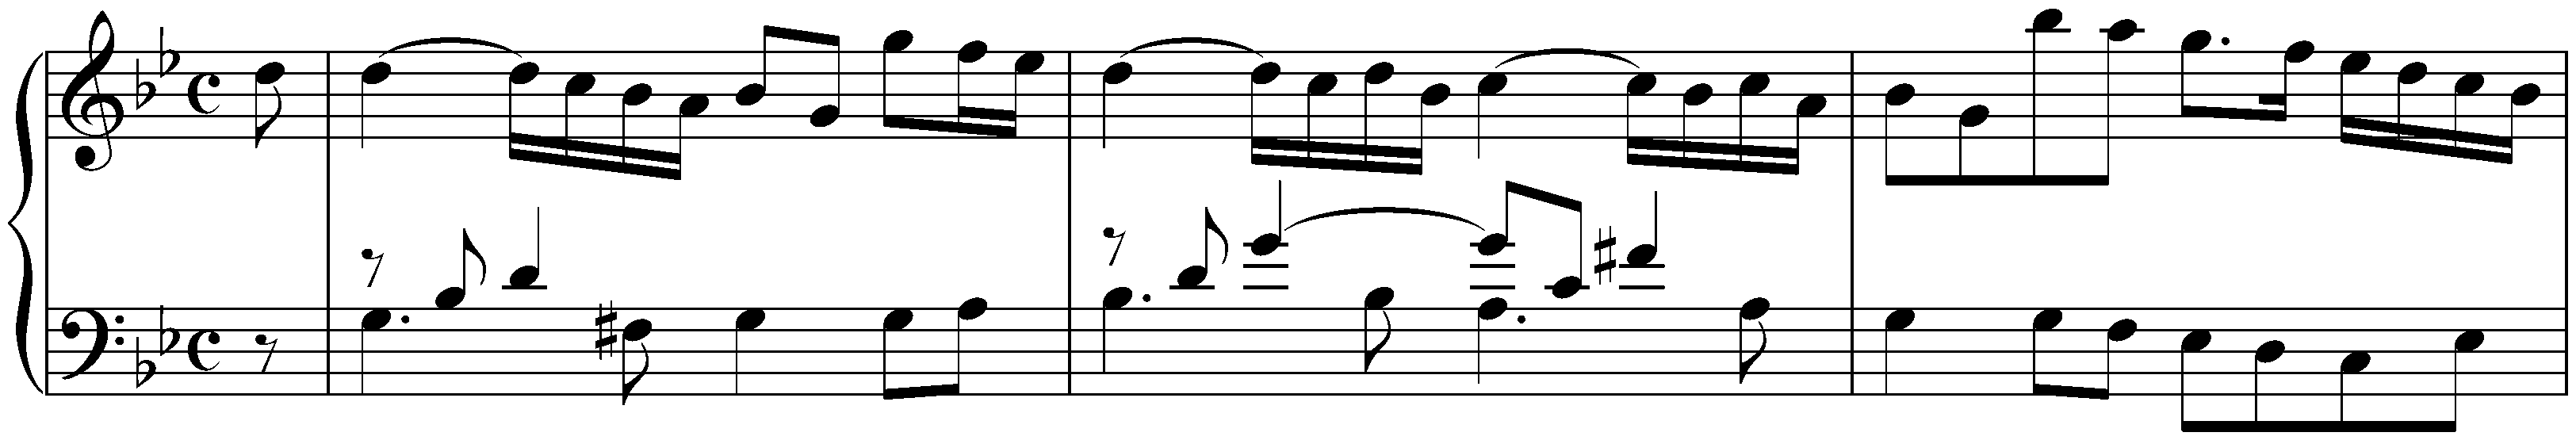 Suite in G minor, HWV 451; 1. Allemande